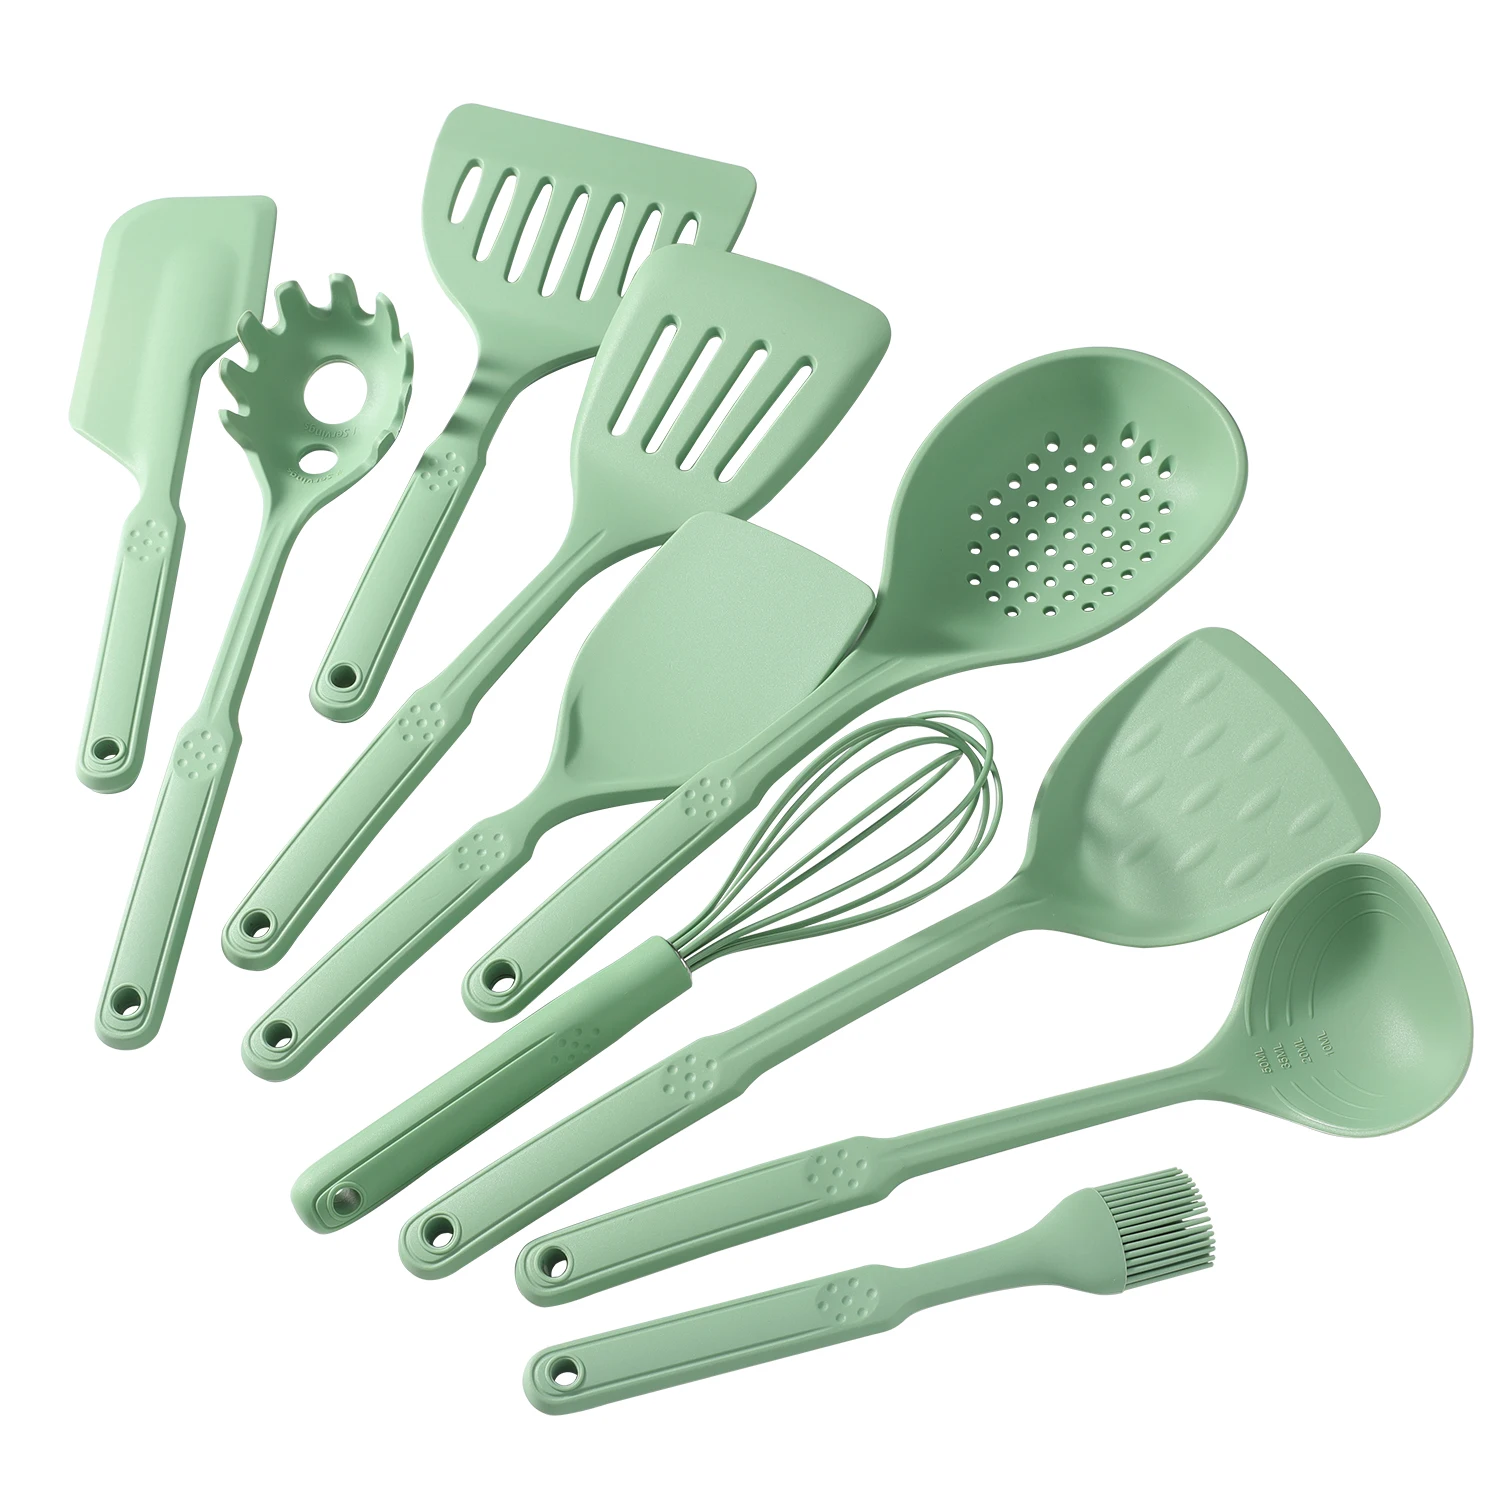 

Kitchen Utensil Set Non-stick Baking Kitchenware spatula spoon Accessories Cookware Set 12pcs Silicone Food Grade OEM Wholesale, Black / red / grey / green